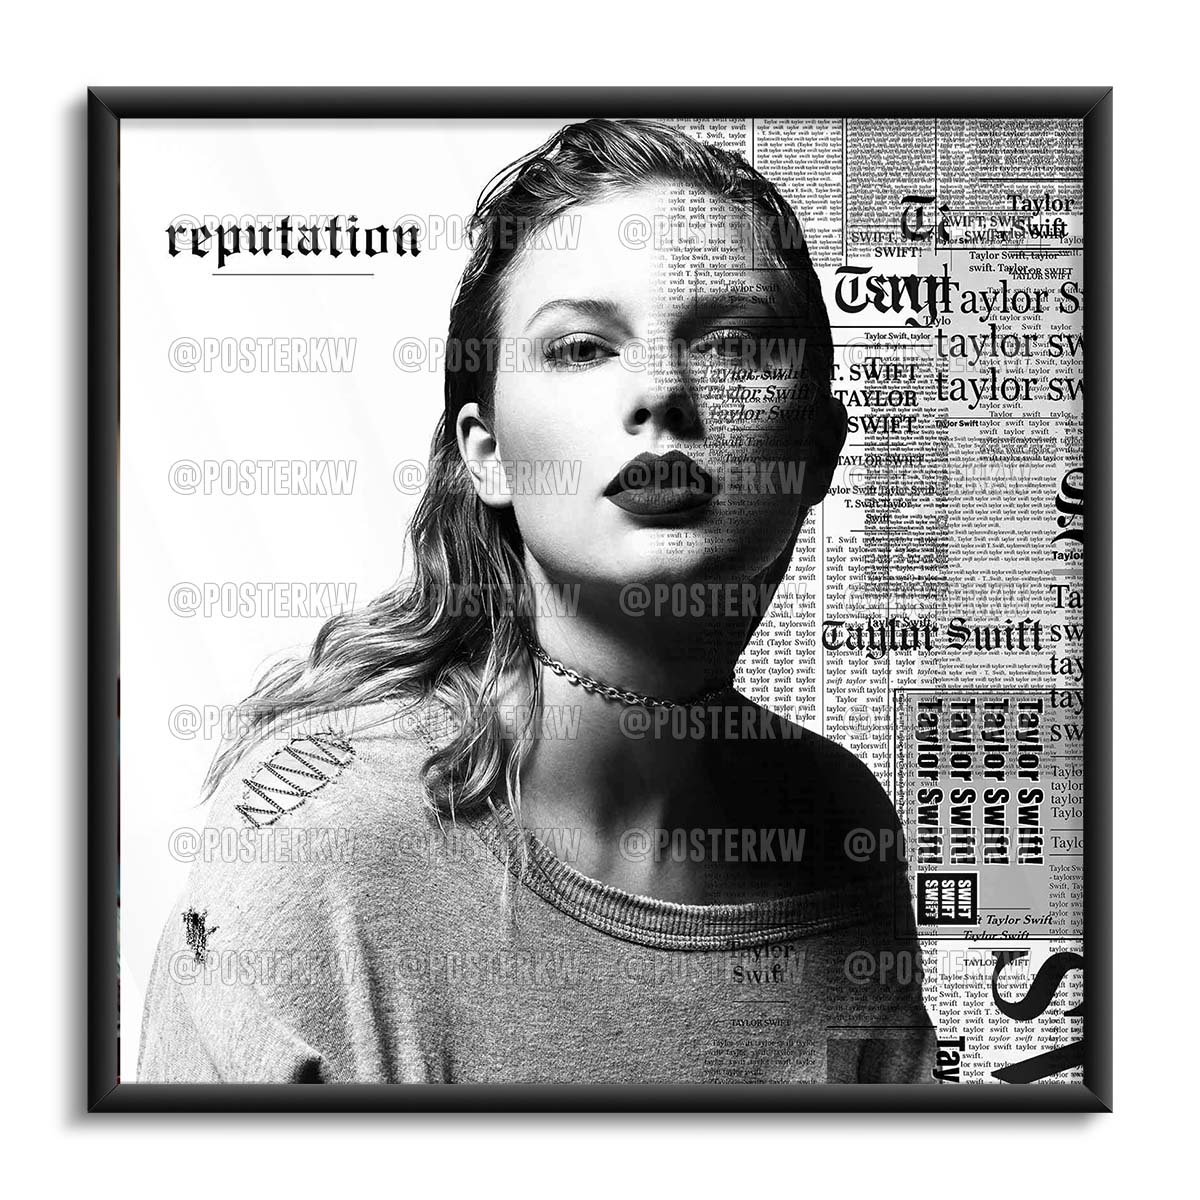 Taylor Swift e o álbum REPUTATION 